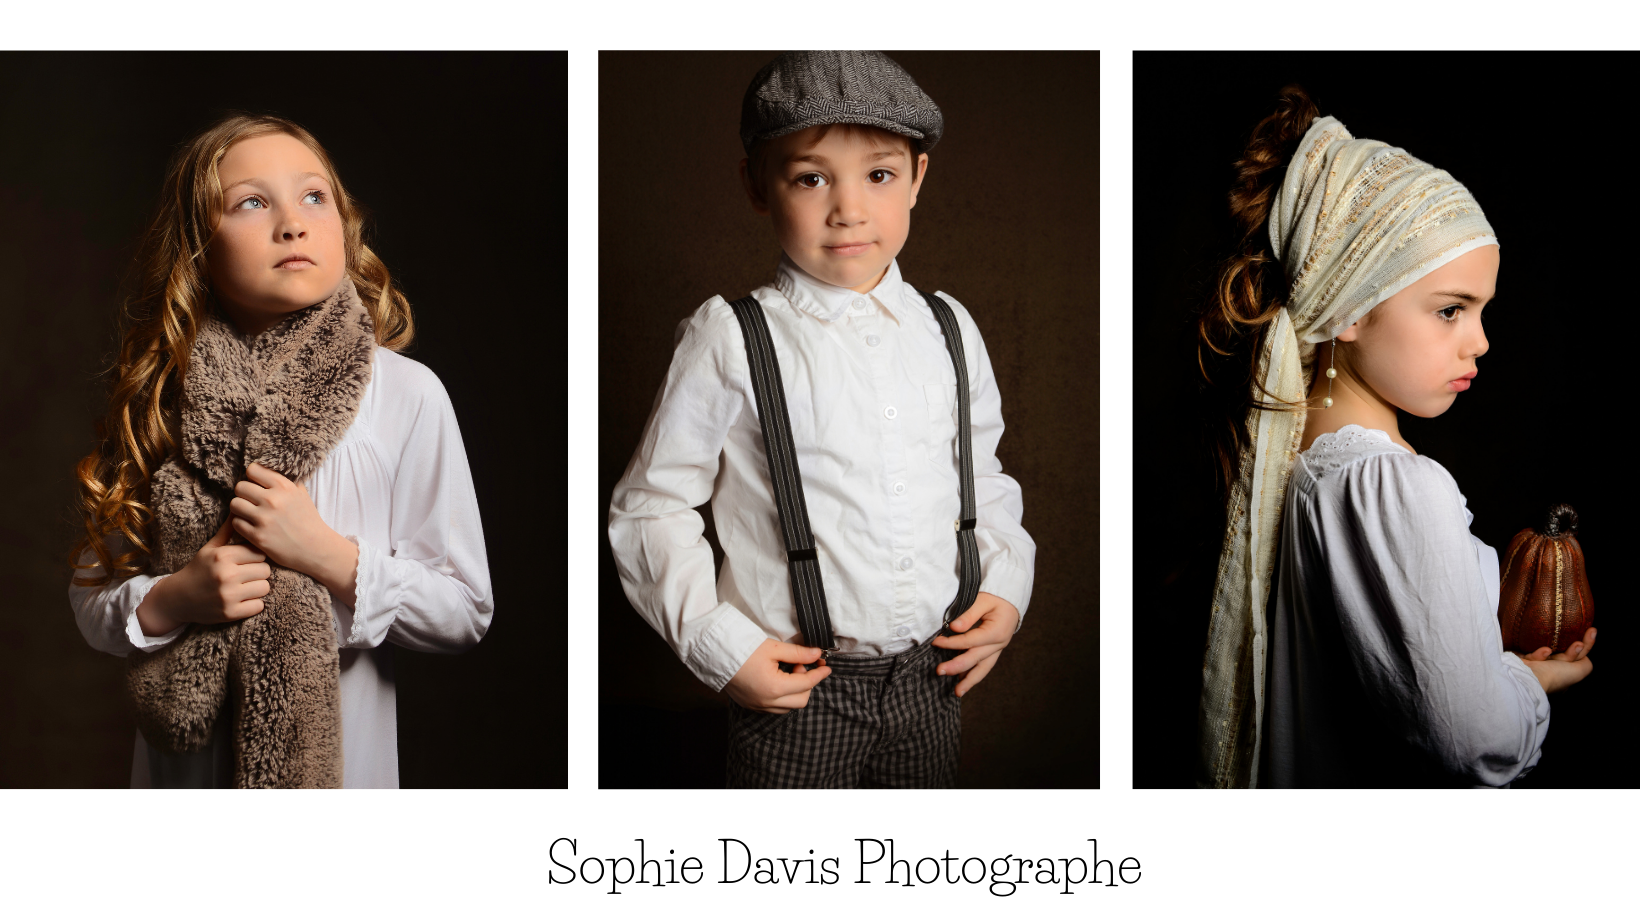 Sophie davis photographe 1